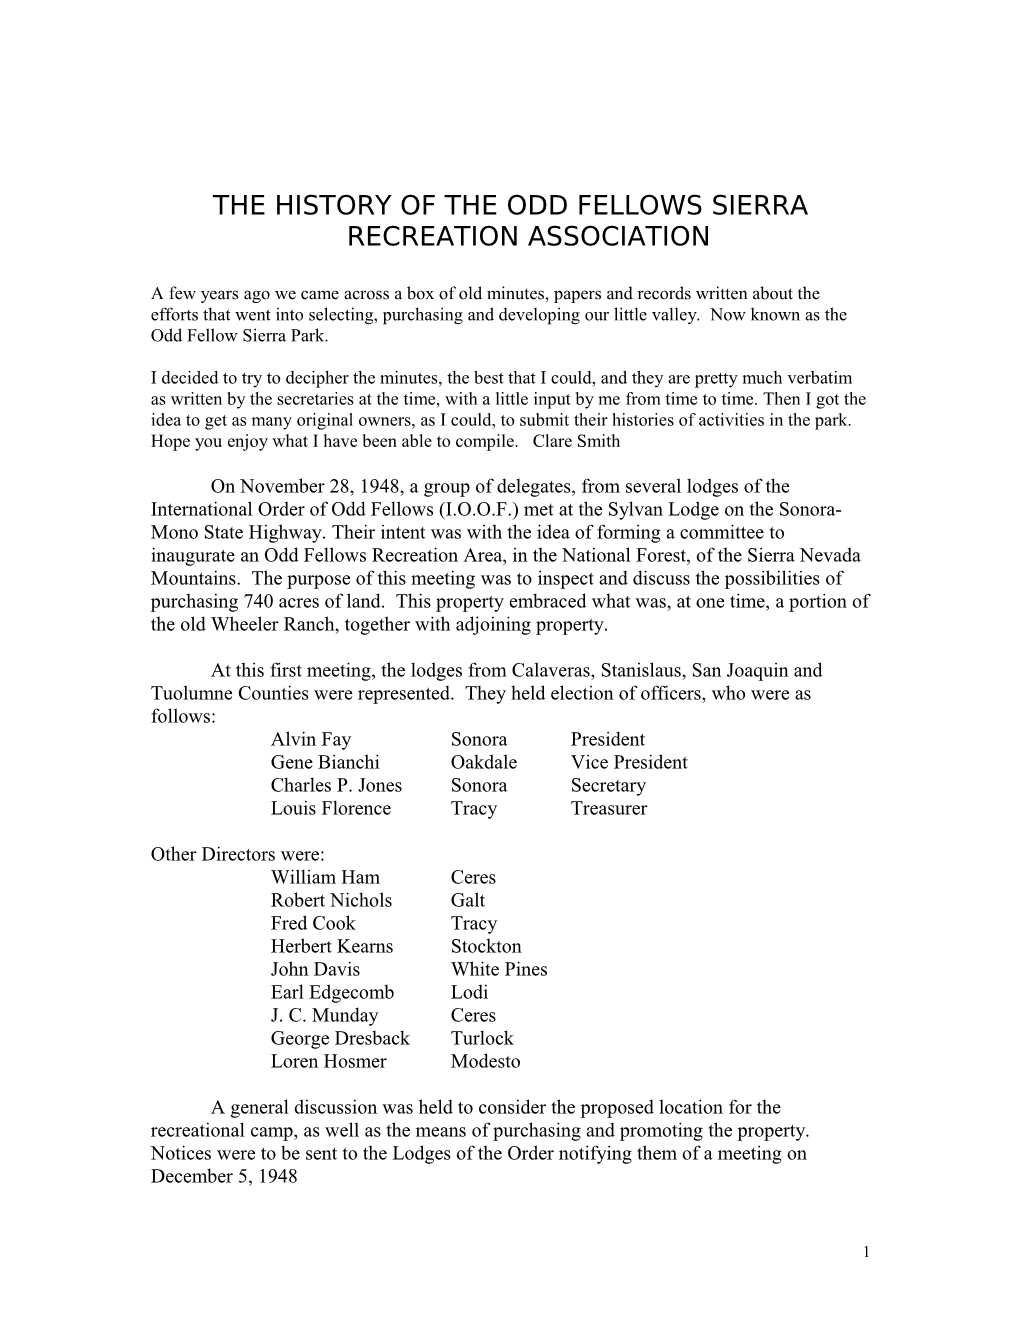 The History of the Odd Felows Sierra Recreaton Association